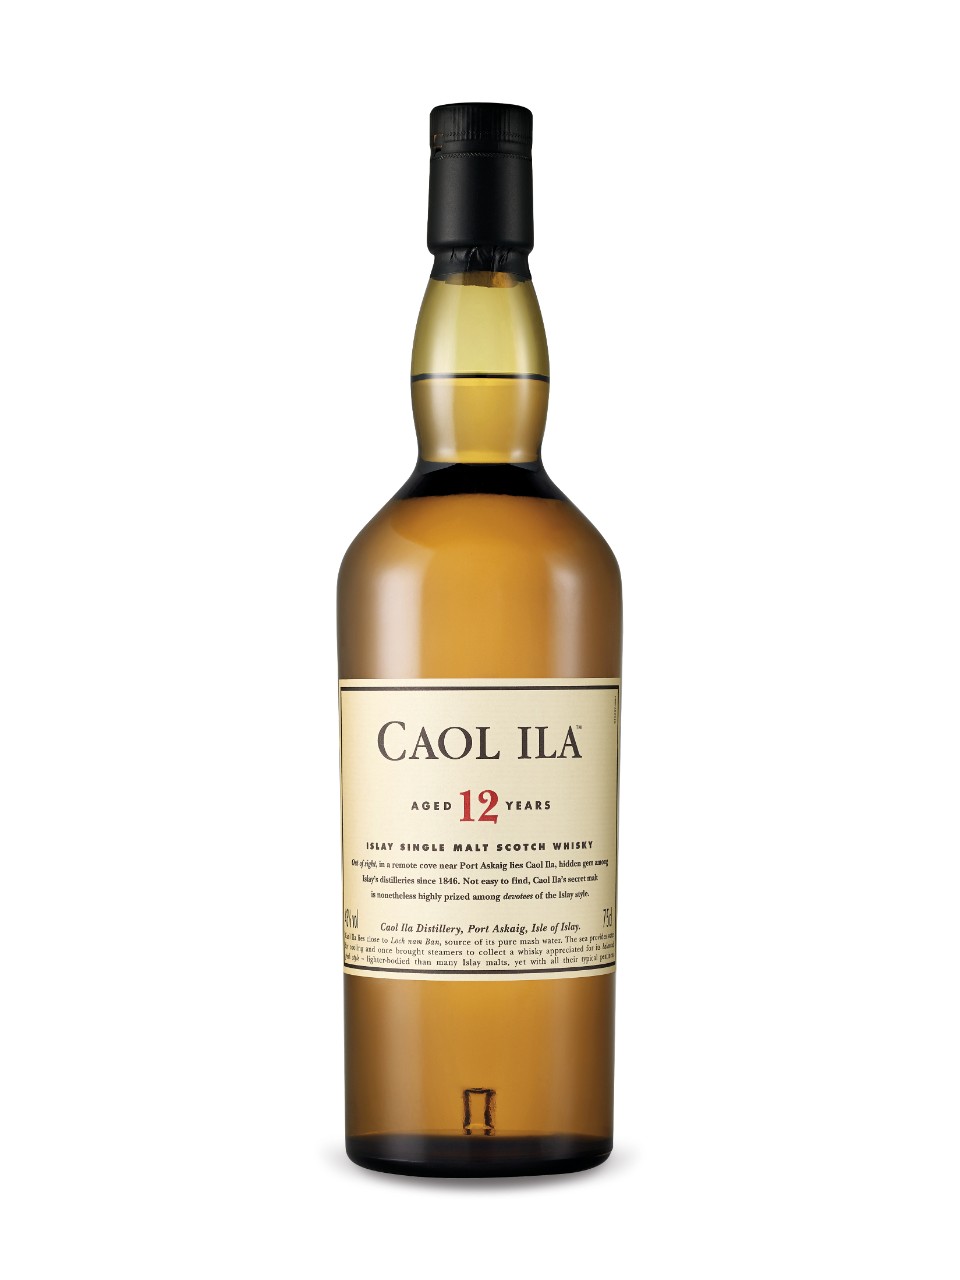 Caol Ila 12 Years Old Islay Single Malt Scotch Whisky